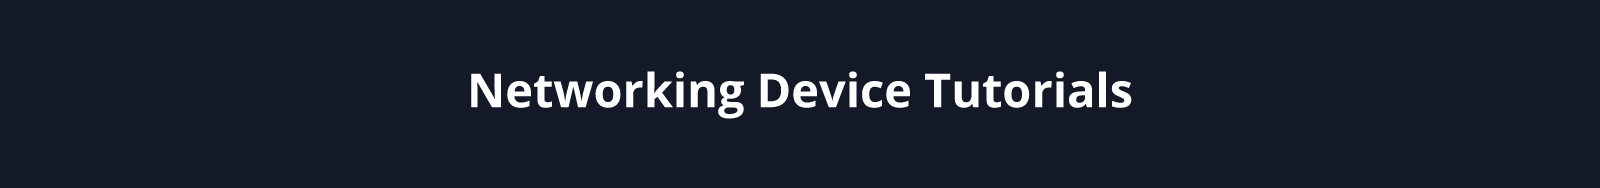 networking device tutorials